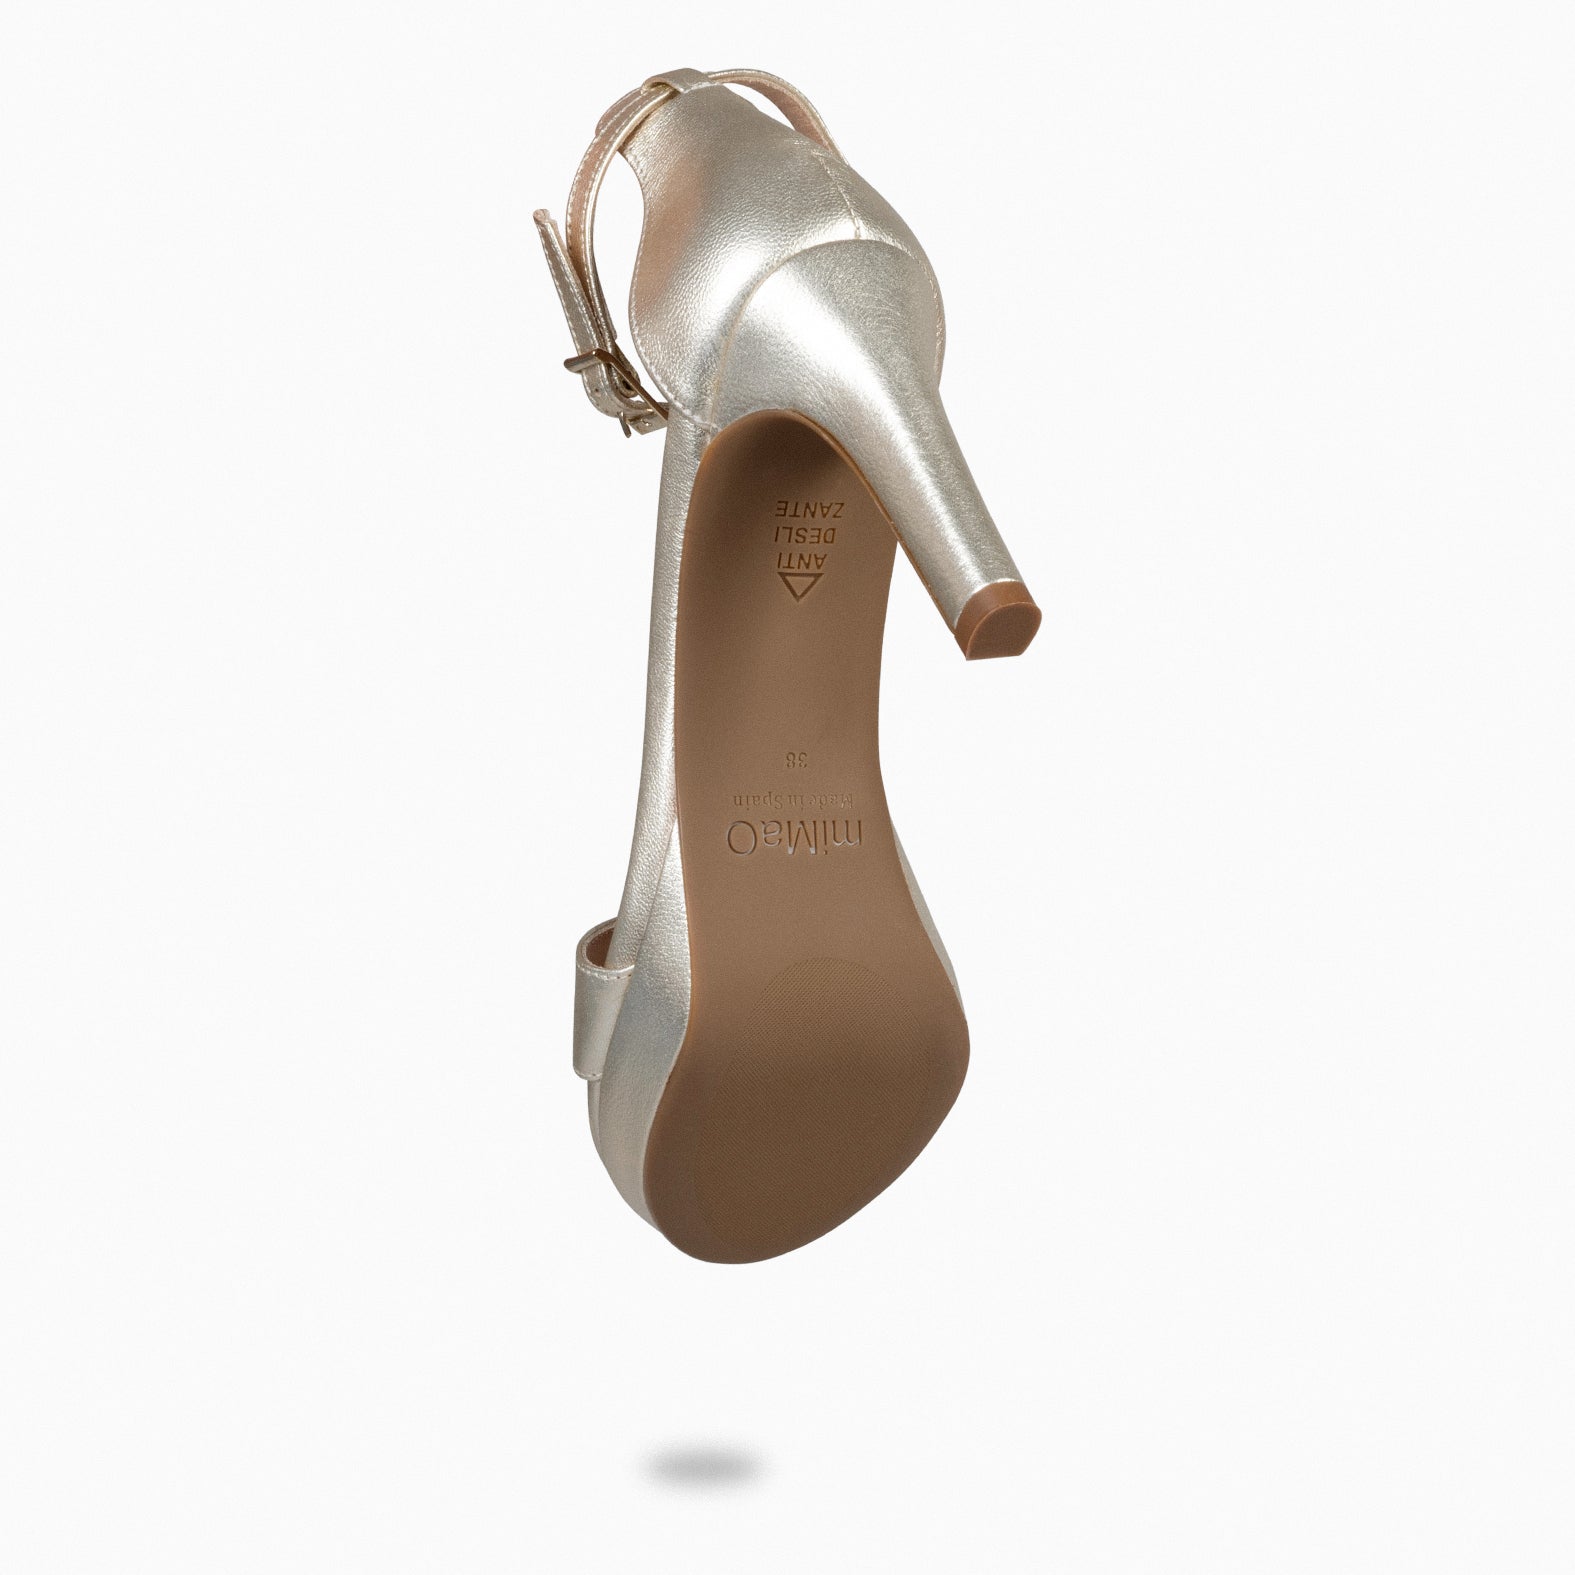 PARTY – GOLDEN high-heeled platform sandals